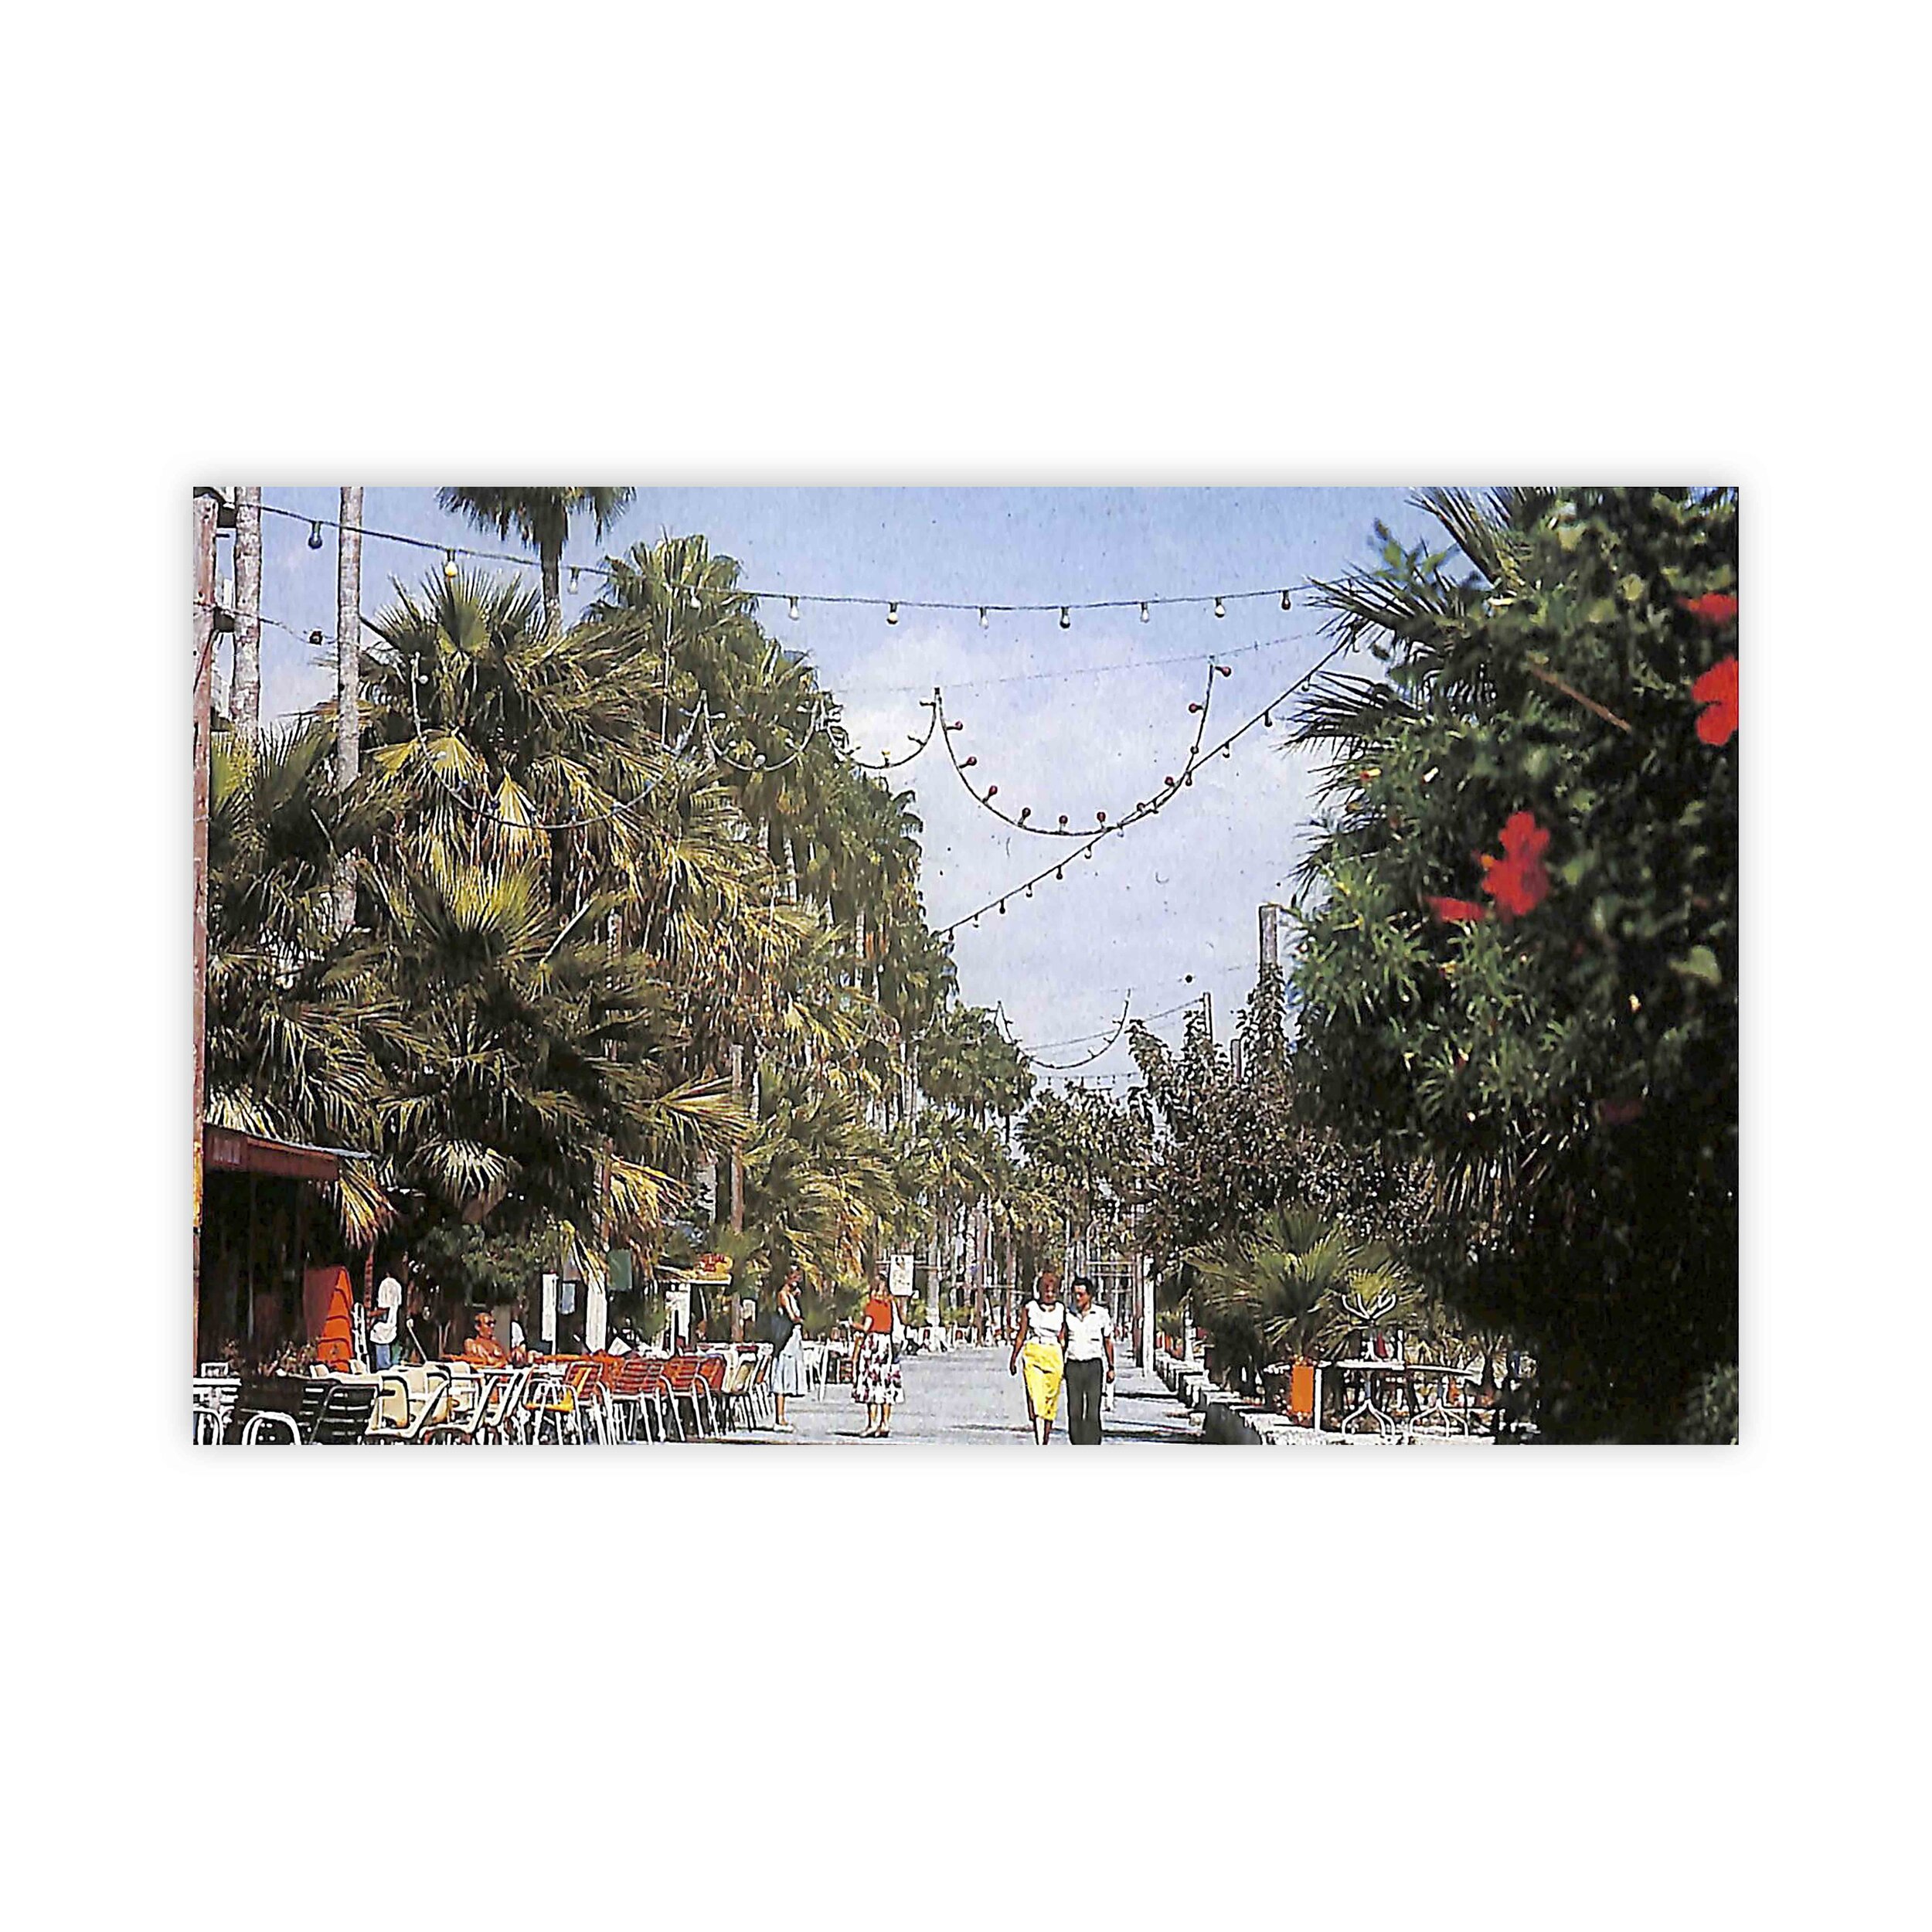  Finikoudes Promenade, Post-card, Larnaca, 1970s 